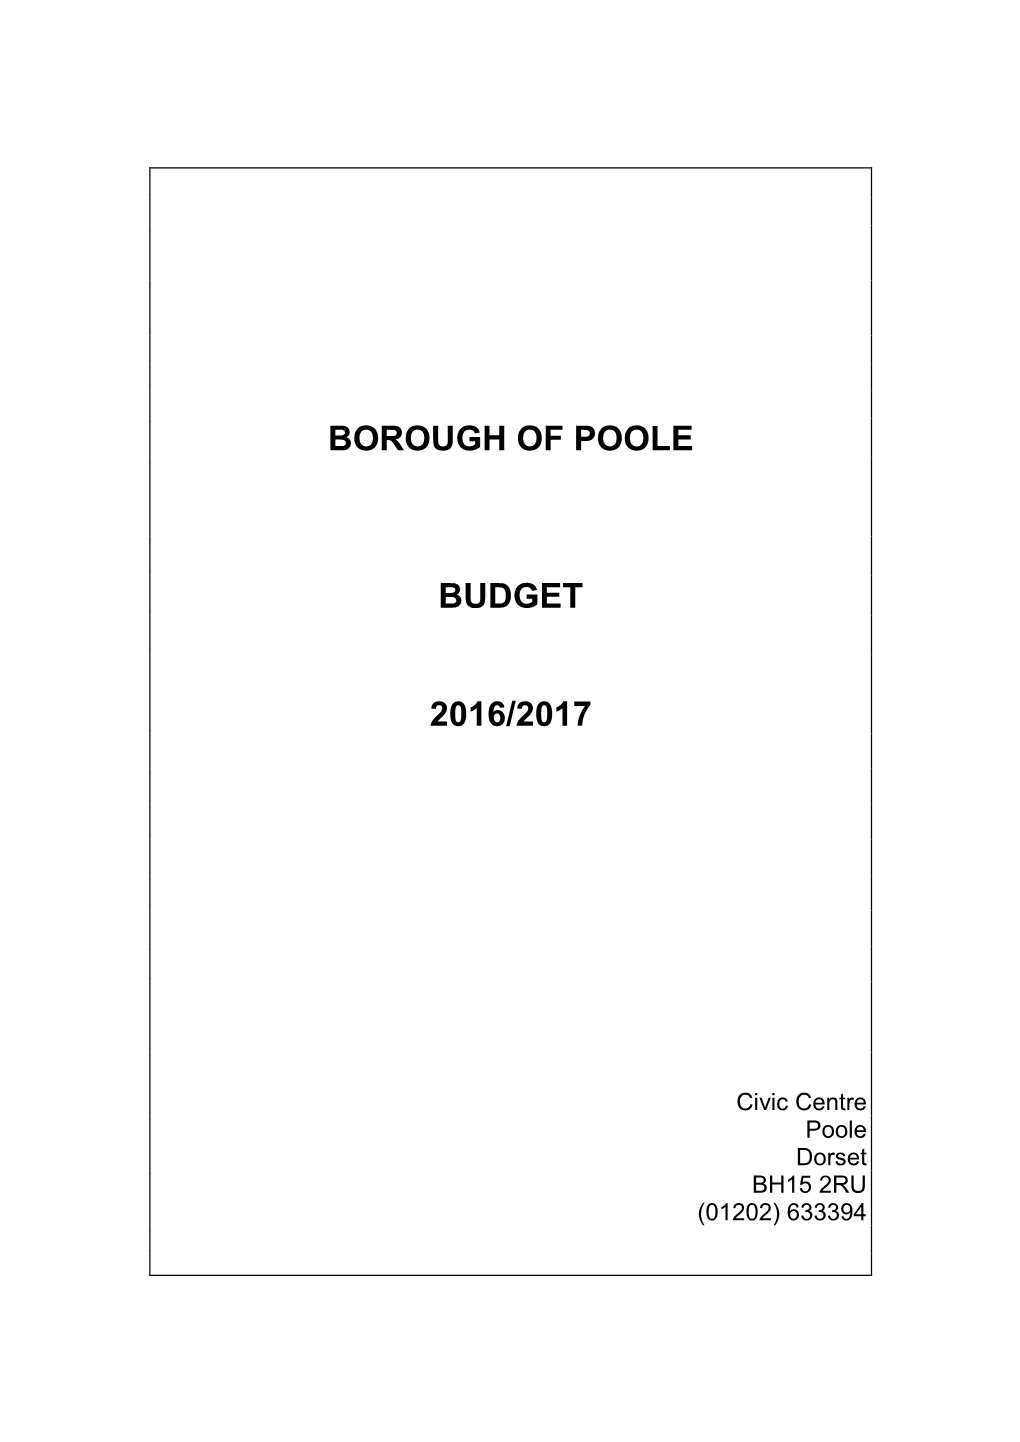 Borough of Poole Budget 2016/2017